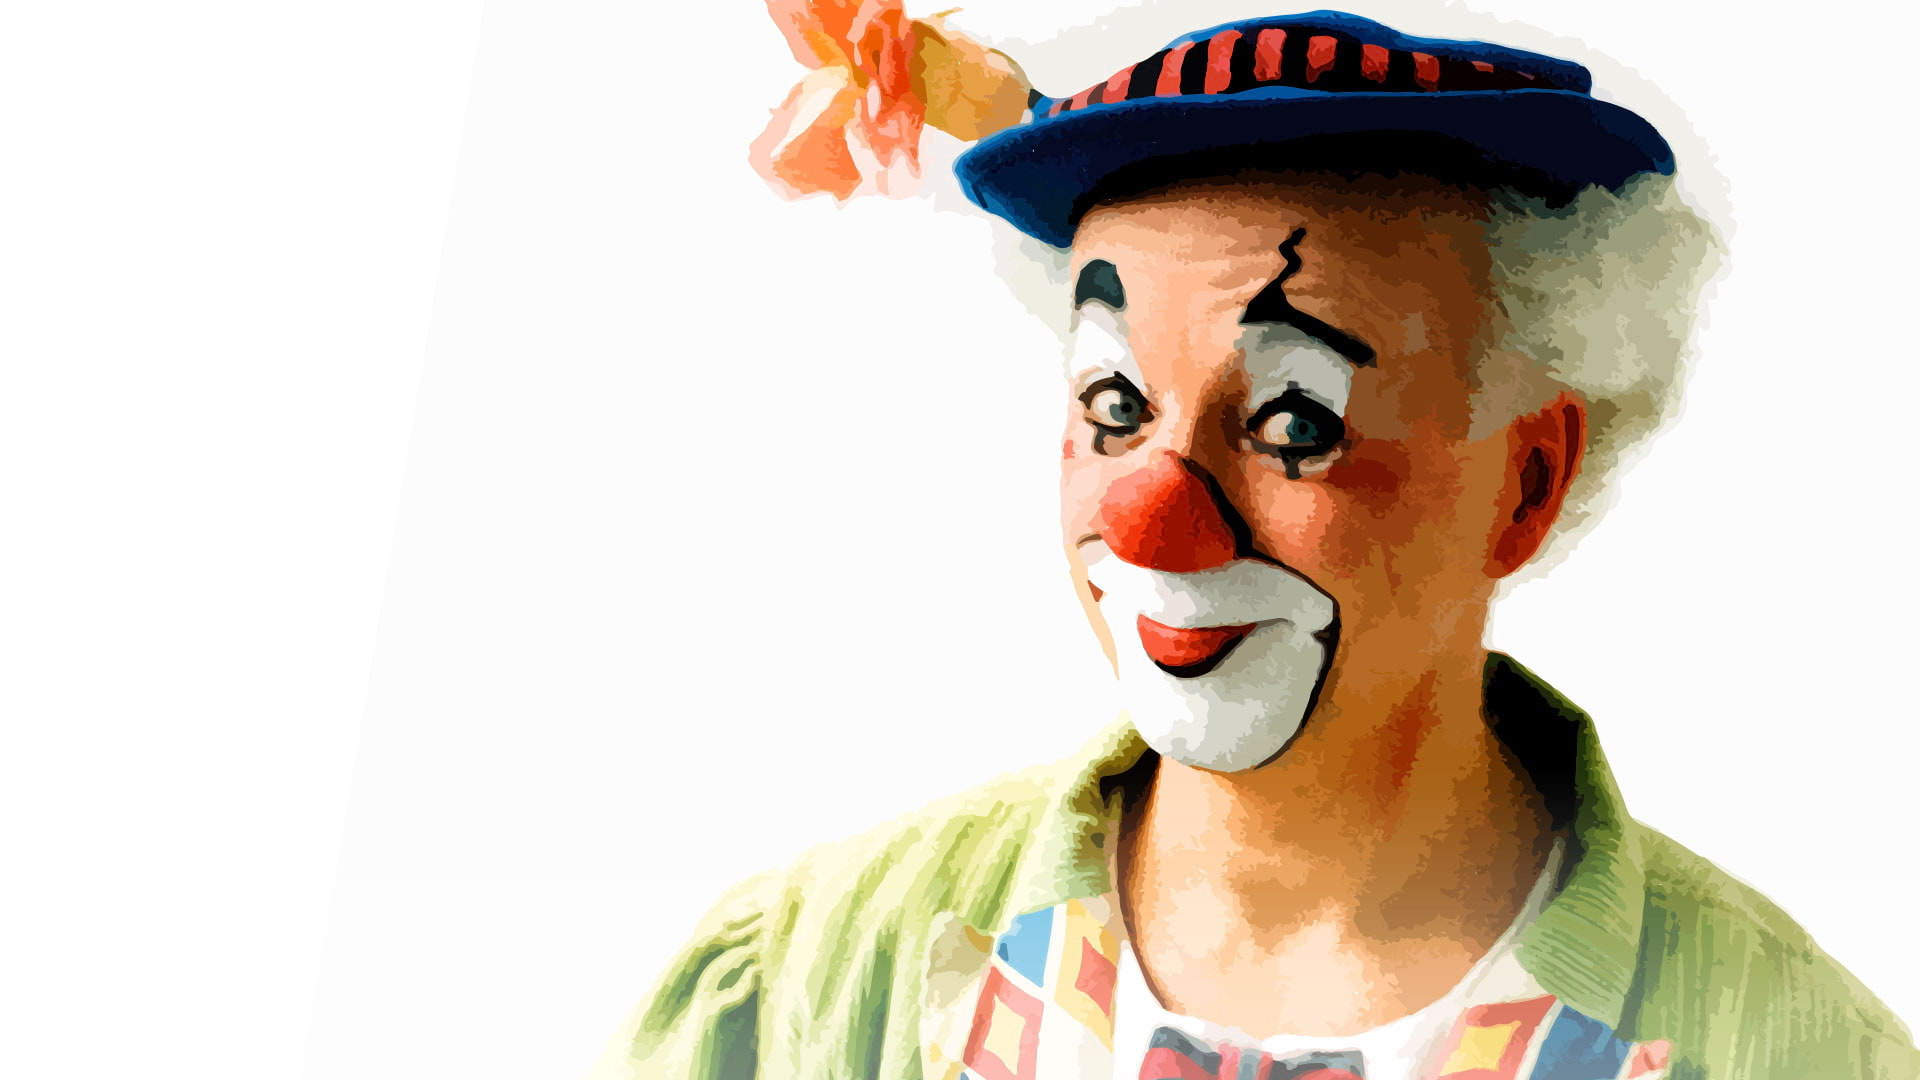 Barnsöndag på Tonsalen: Clownen Manne & co